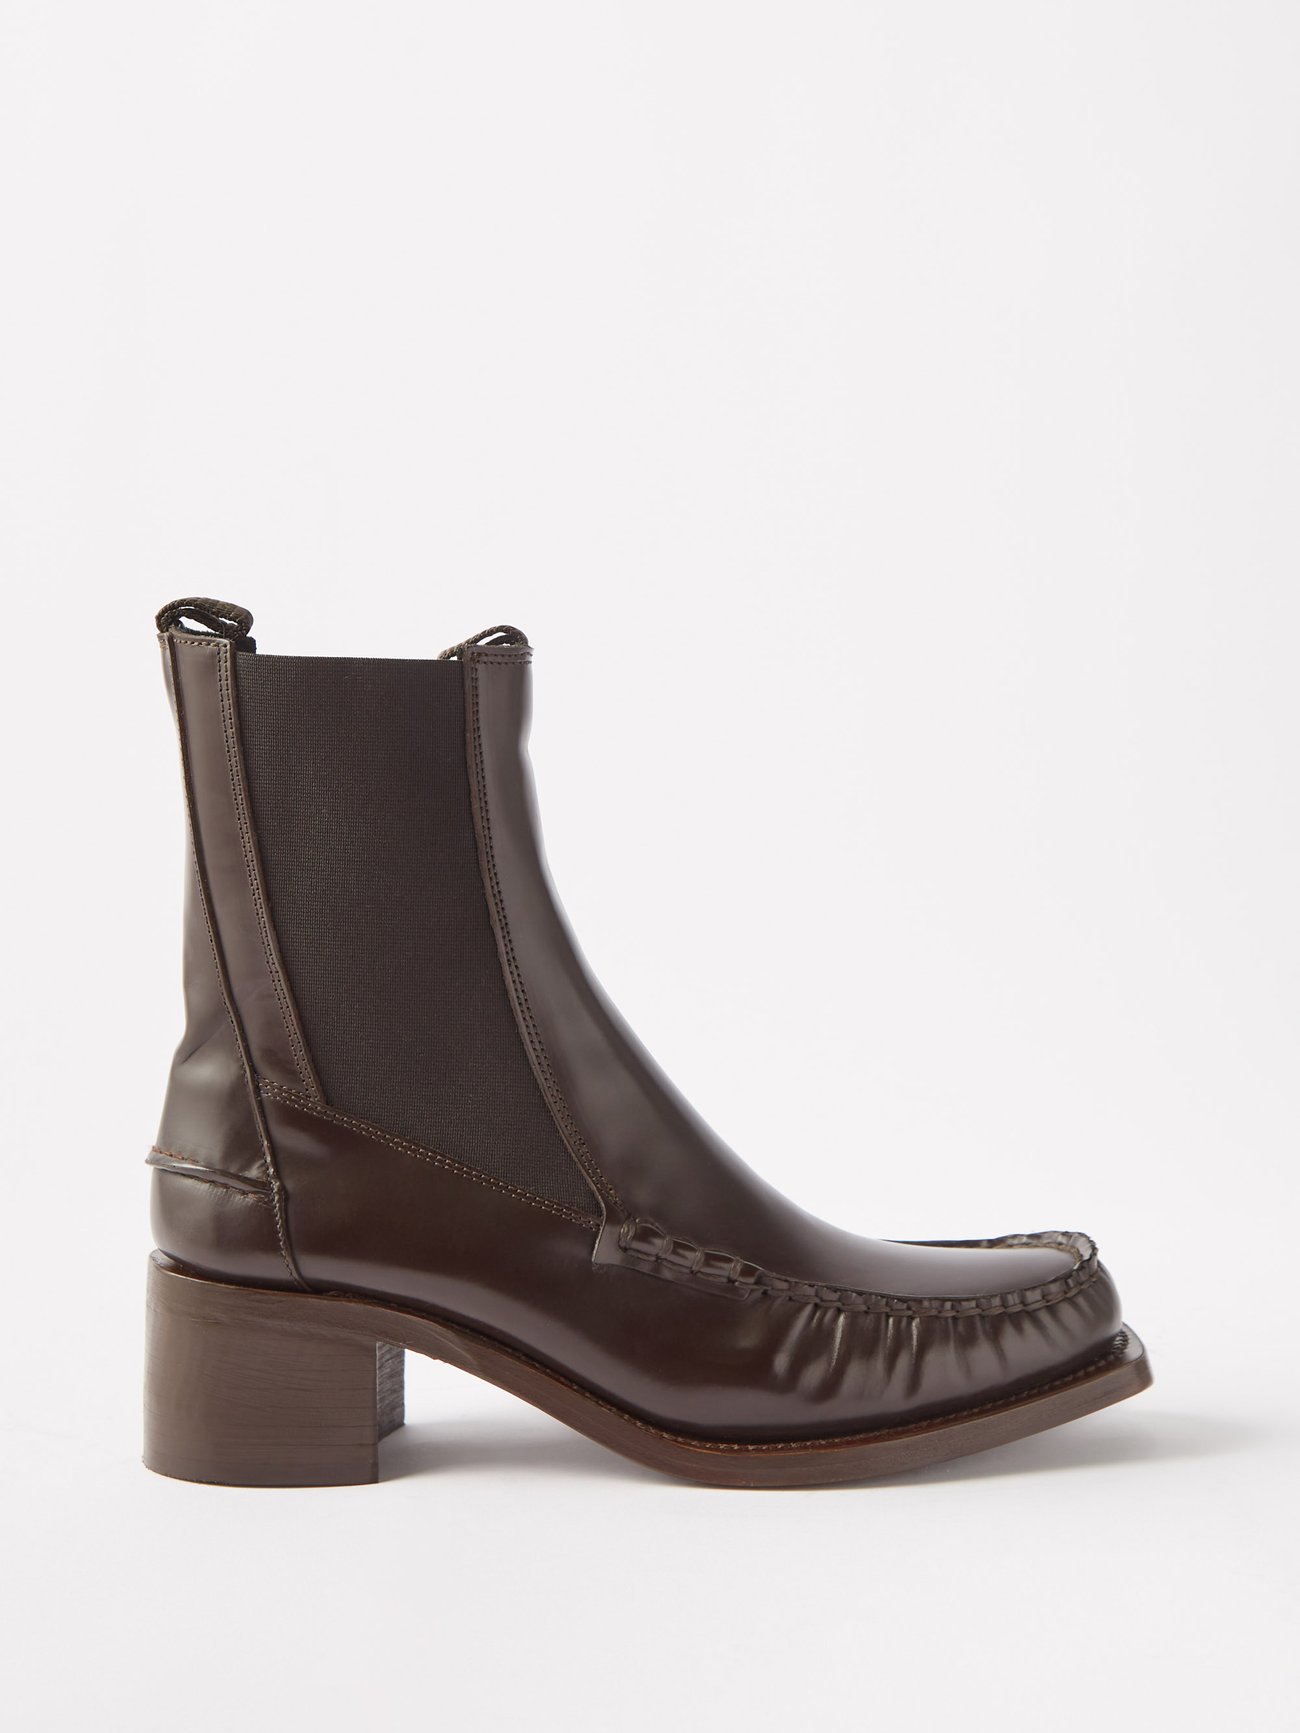 Alda block-heel leather ankle boots